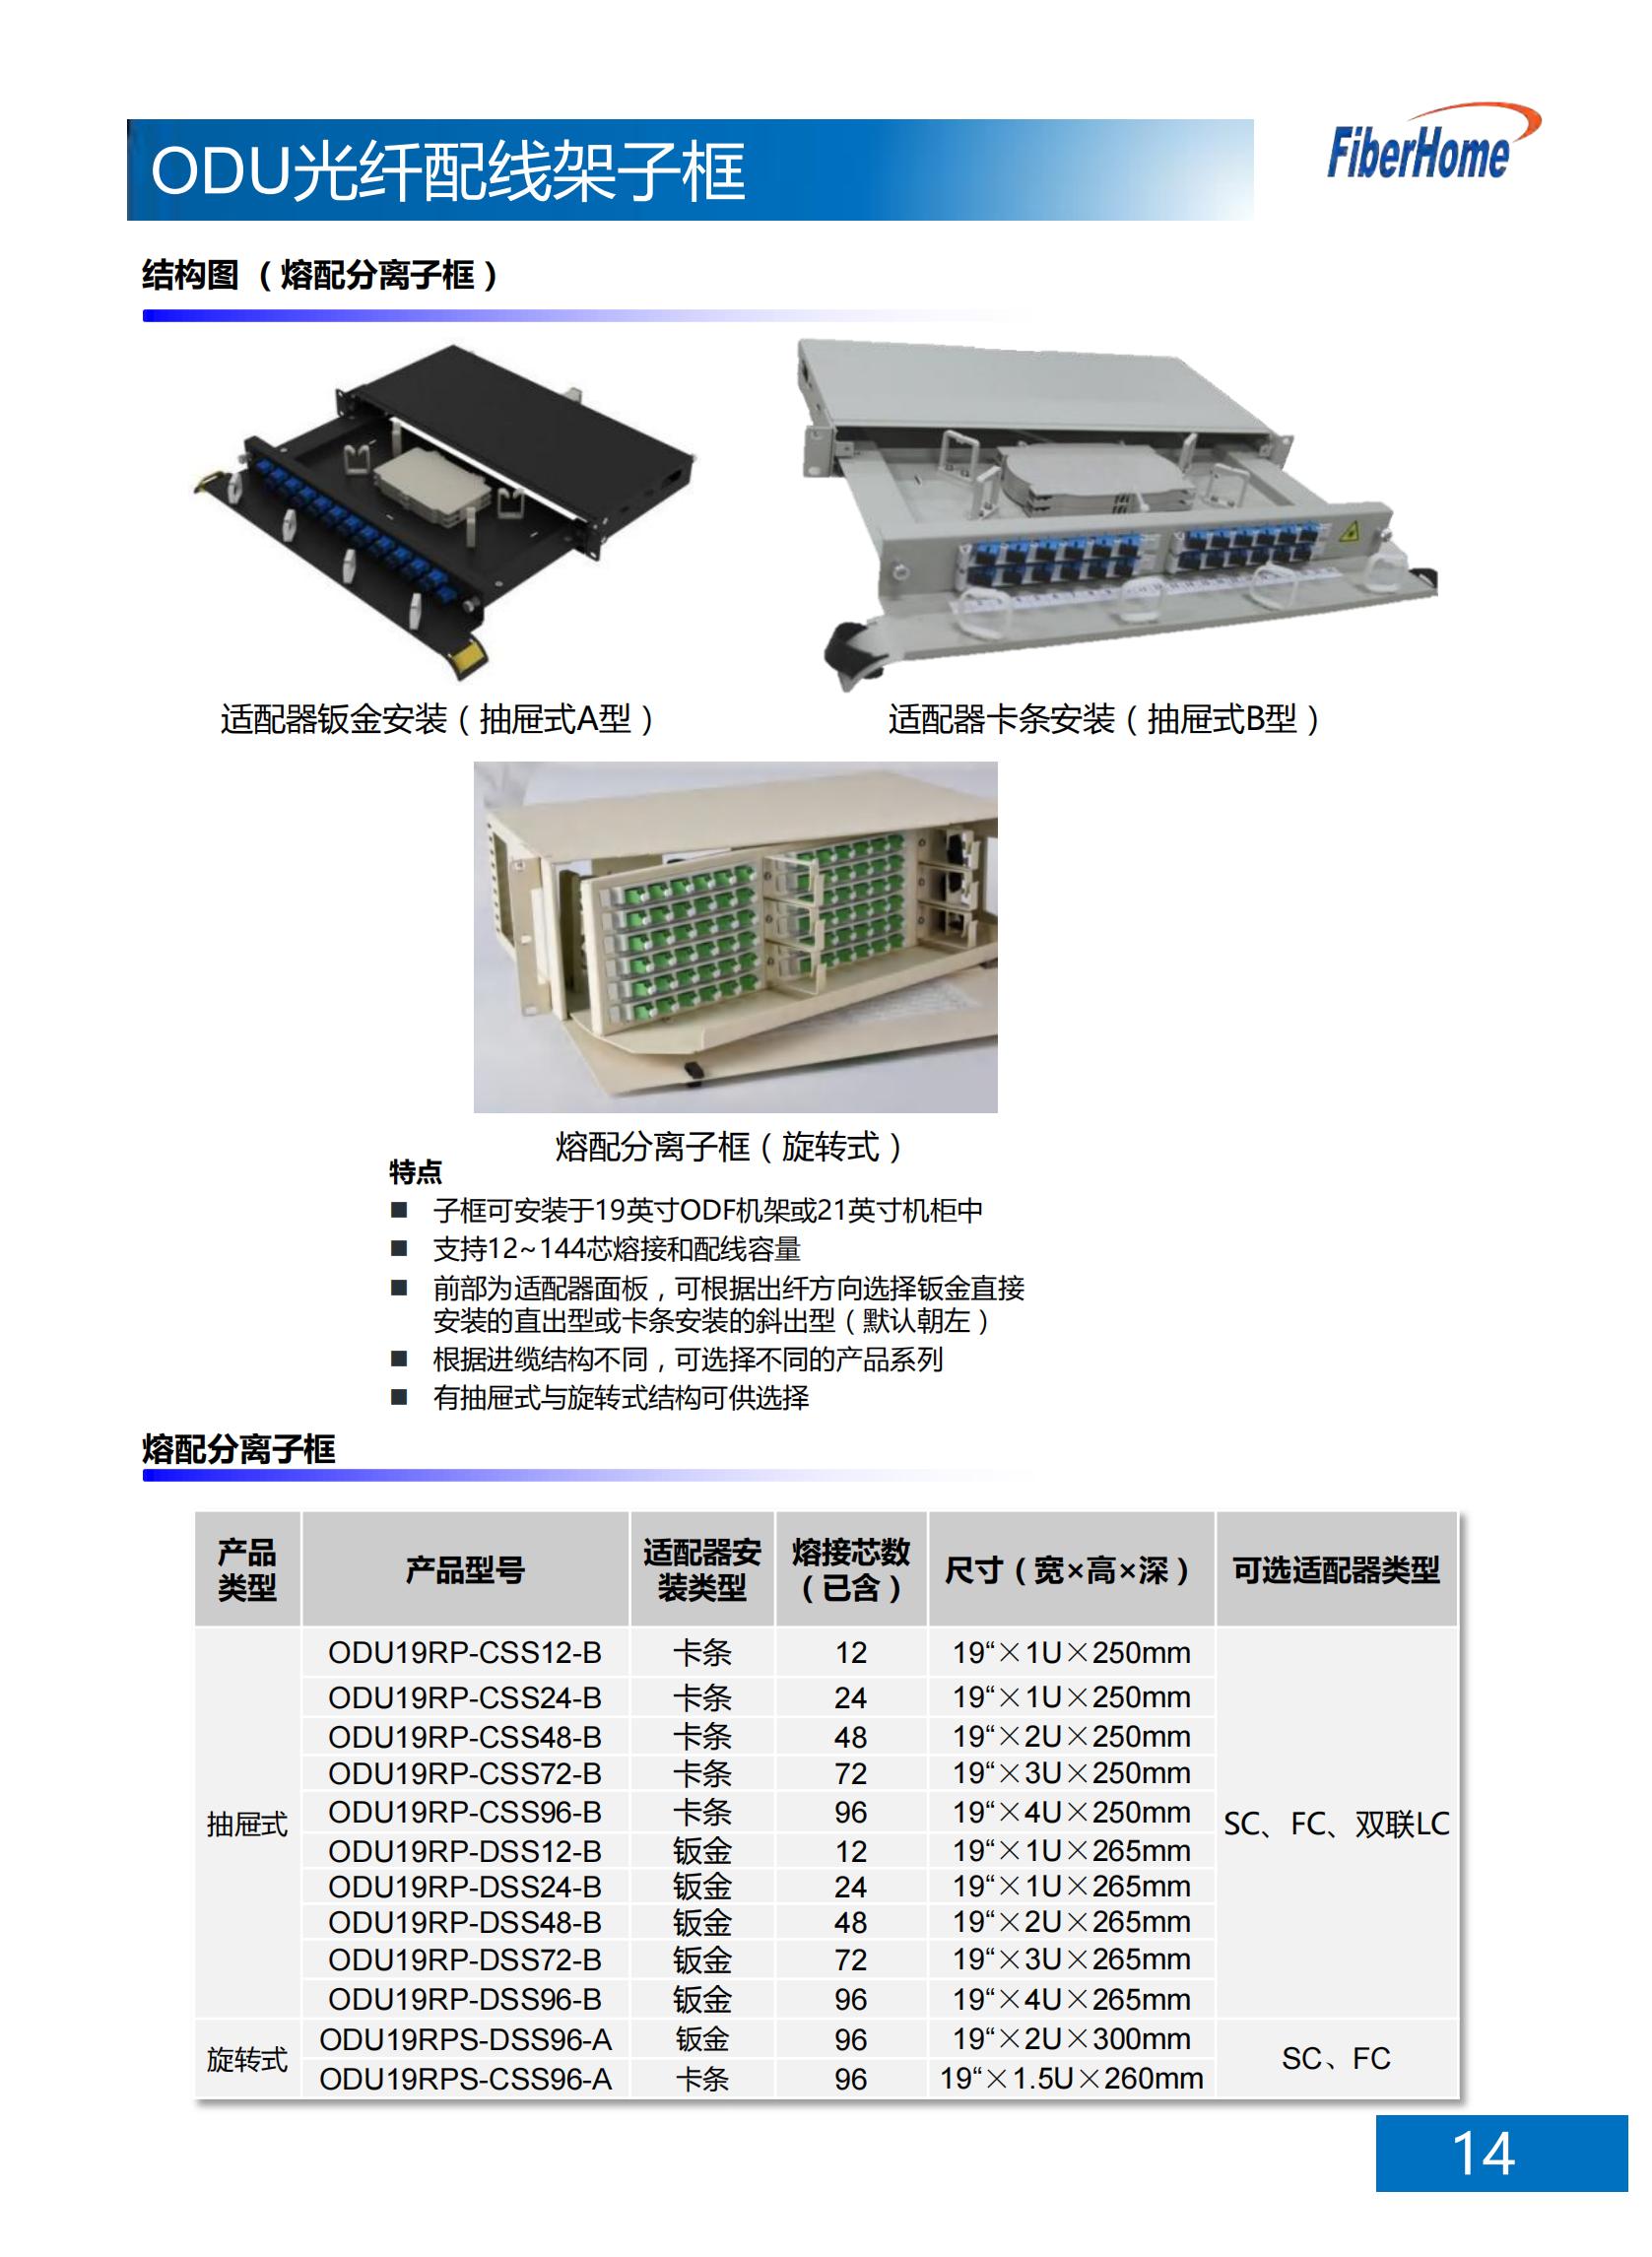 12-core ODU optical fiber distribution frame ODU19T-A12-B-FC (including 12-core FC fusion integration unit*1)